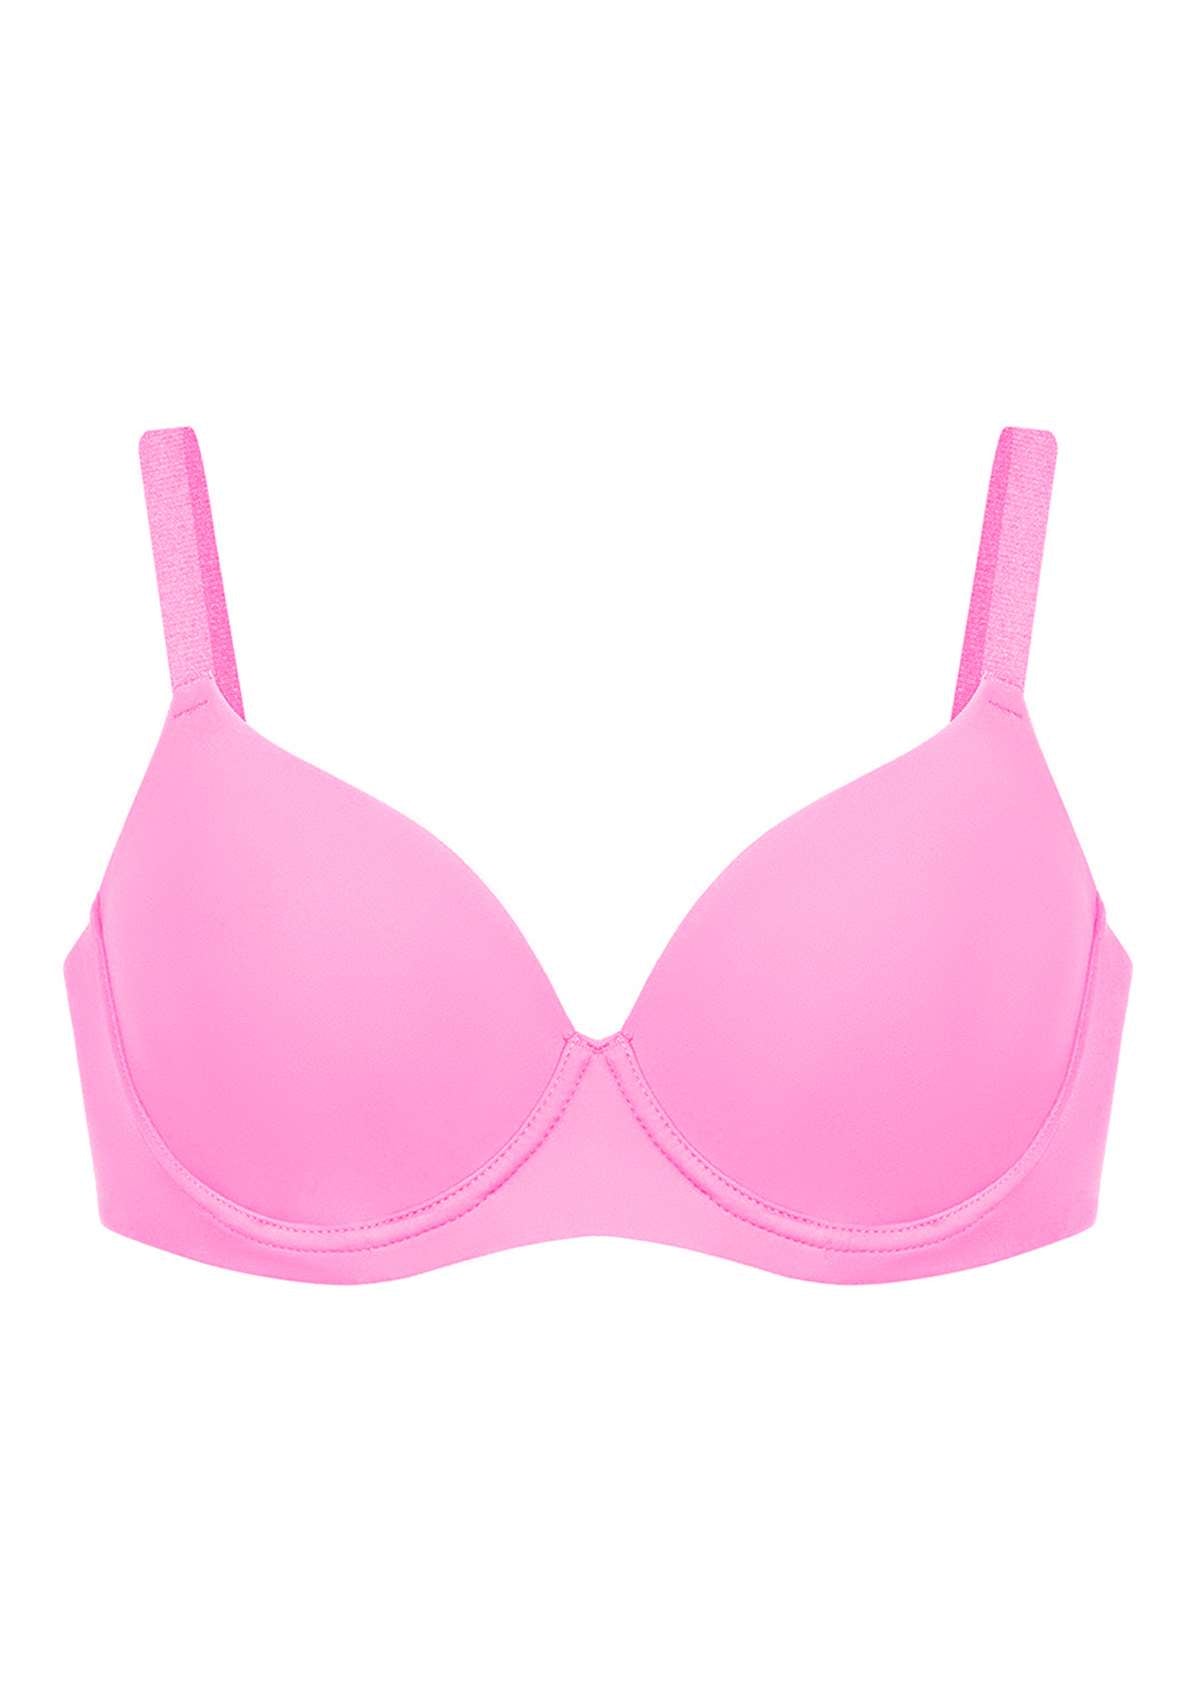 HSIA Gemma Smooth Lightly Padded T-shirt Bra For Heavy Breasts - Pink / 34 / DDD/F